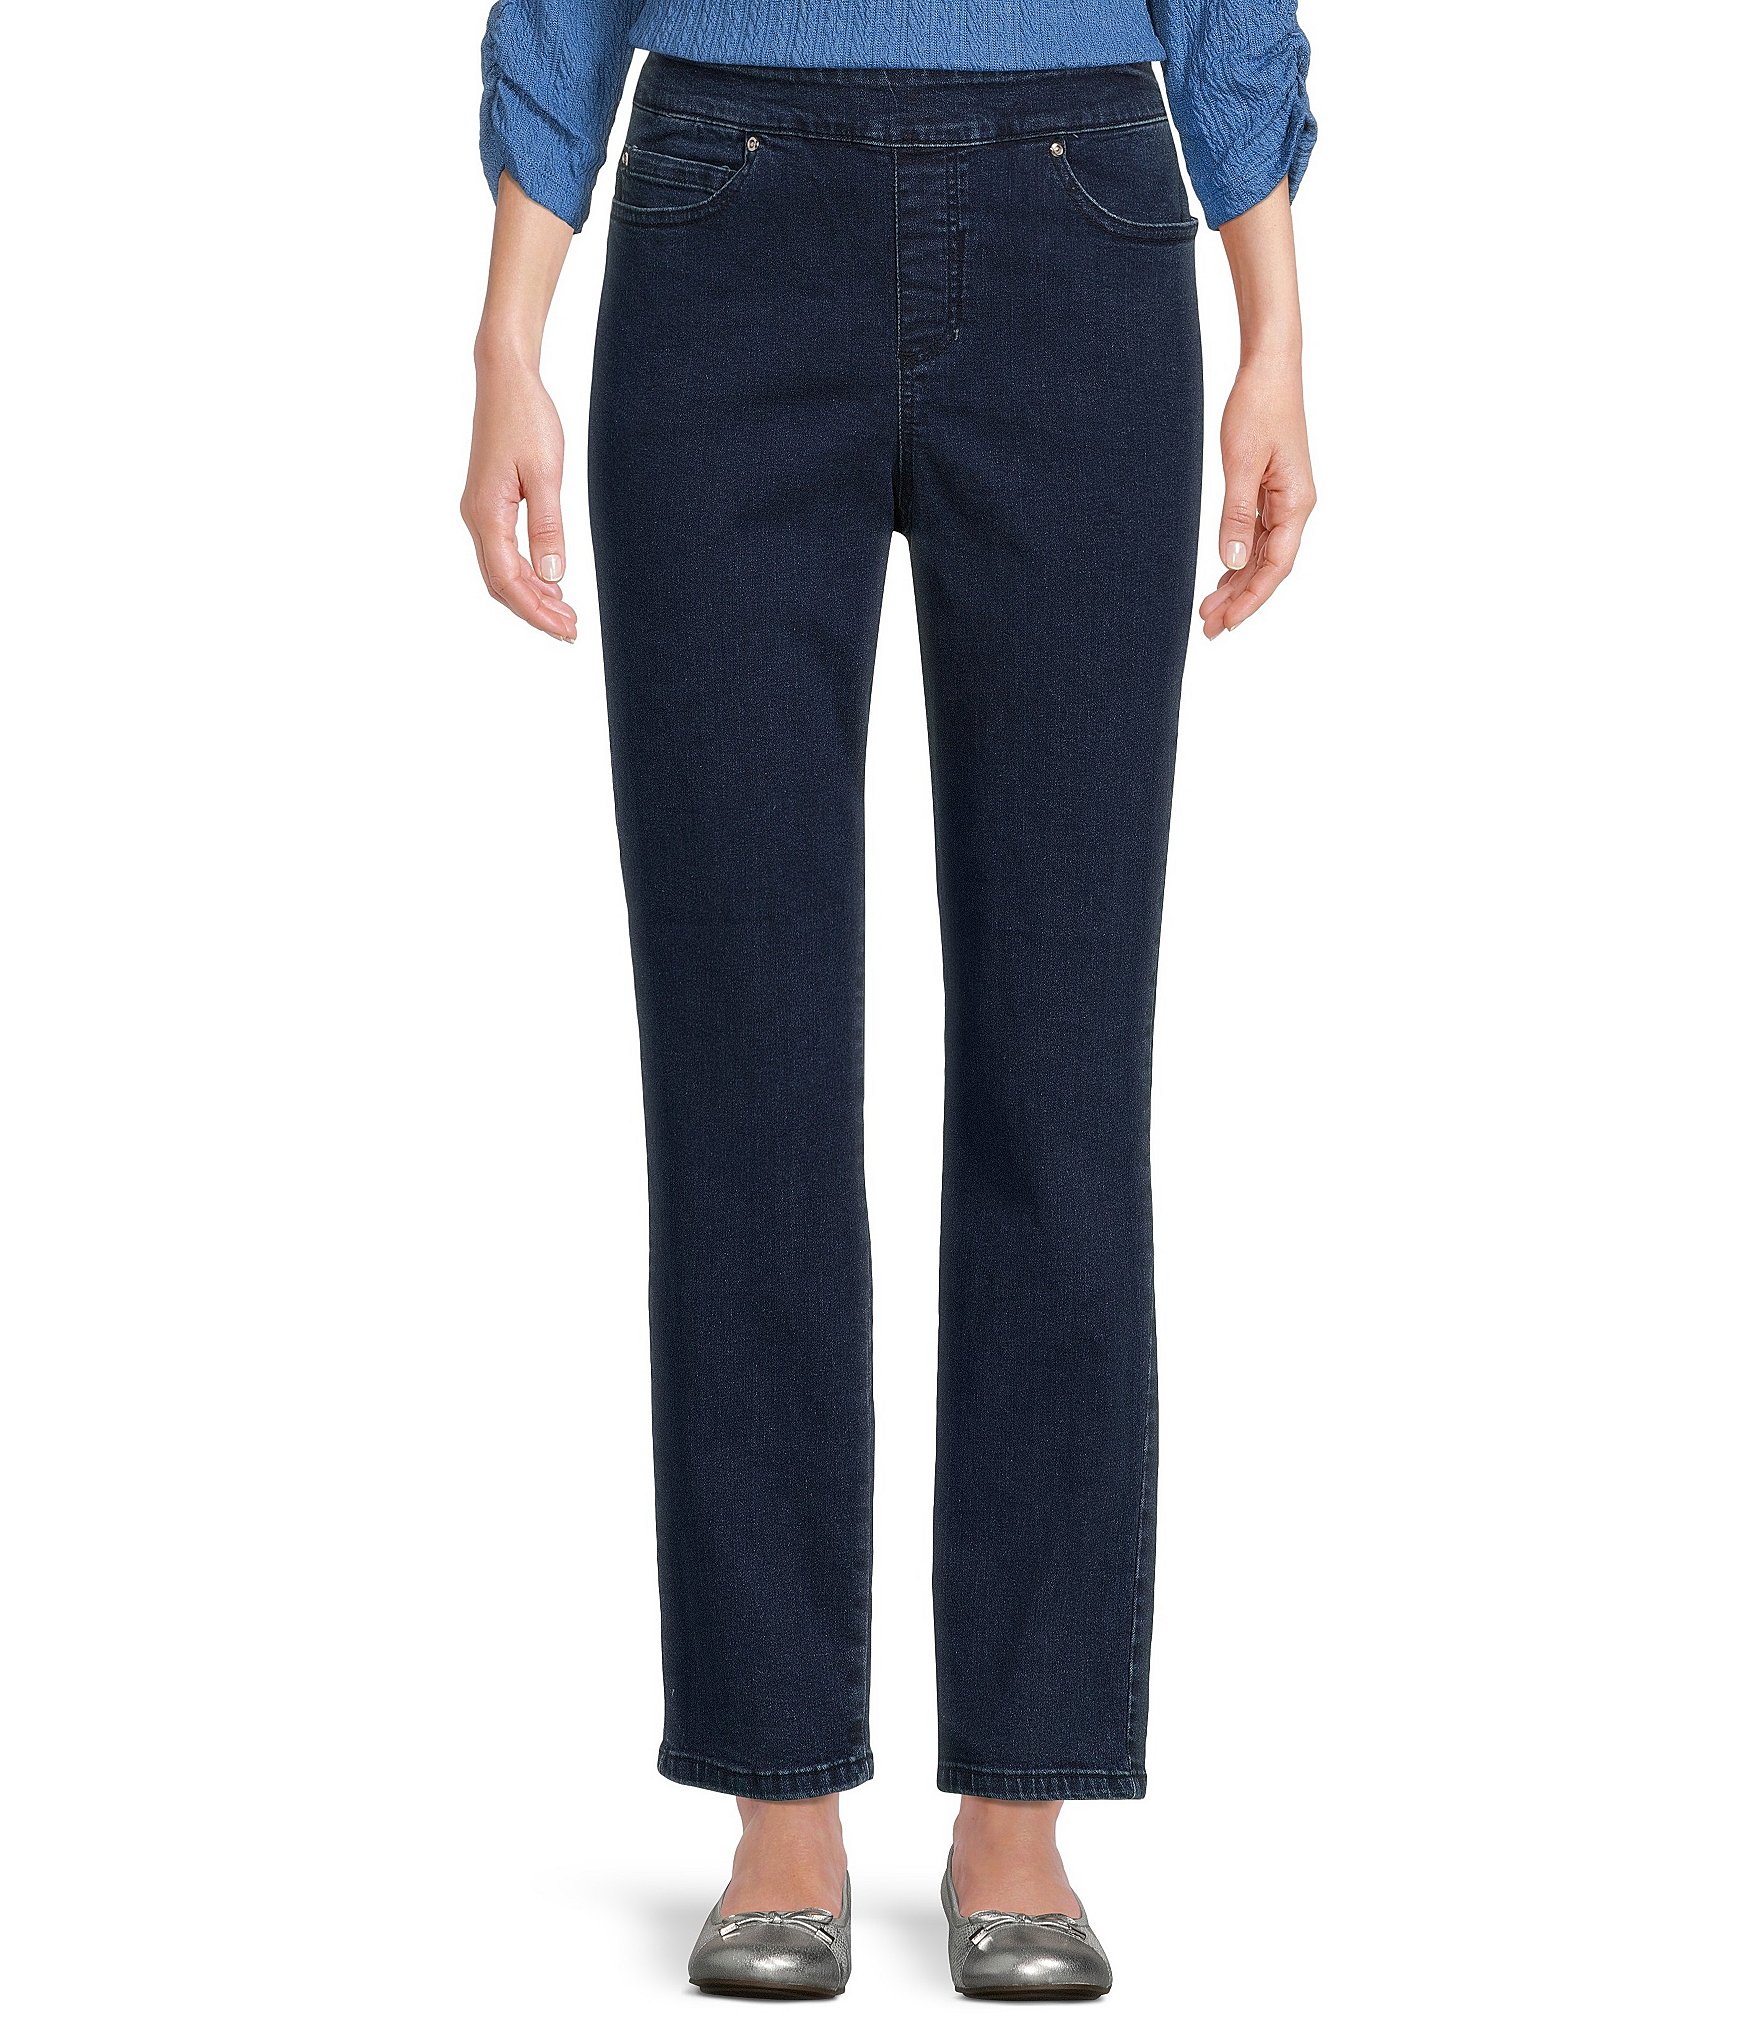 Fashion Lee Jeans Women's Size 16 Petite VTG MOM High Rise Pocketless ...